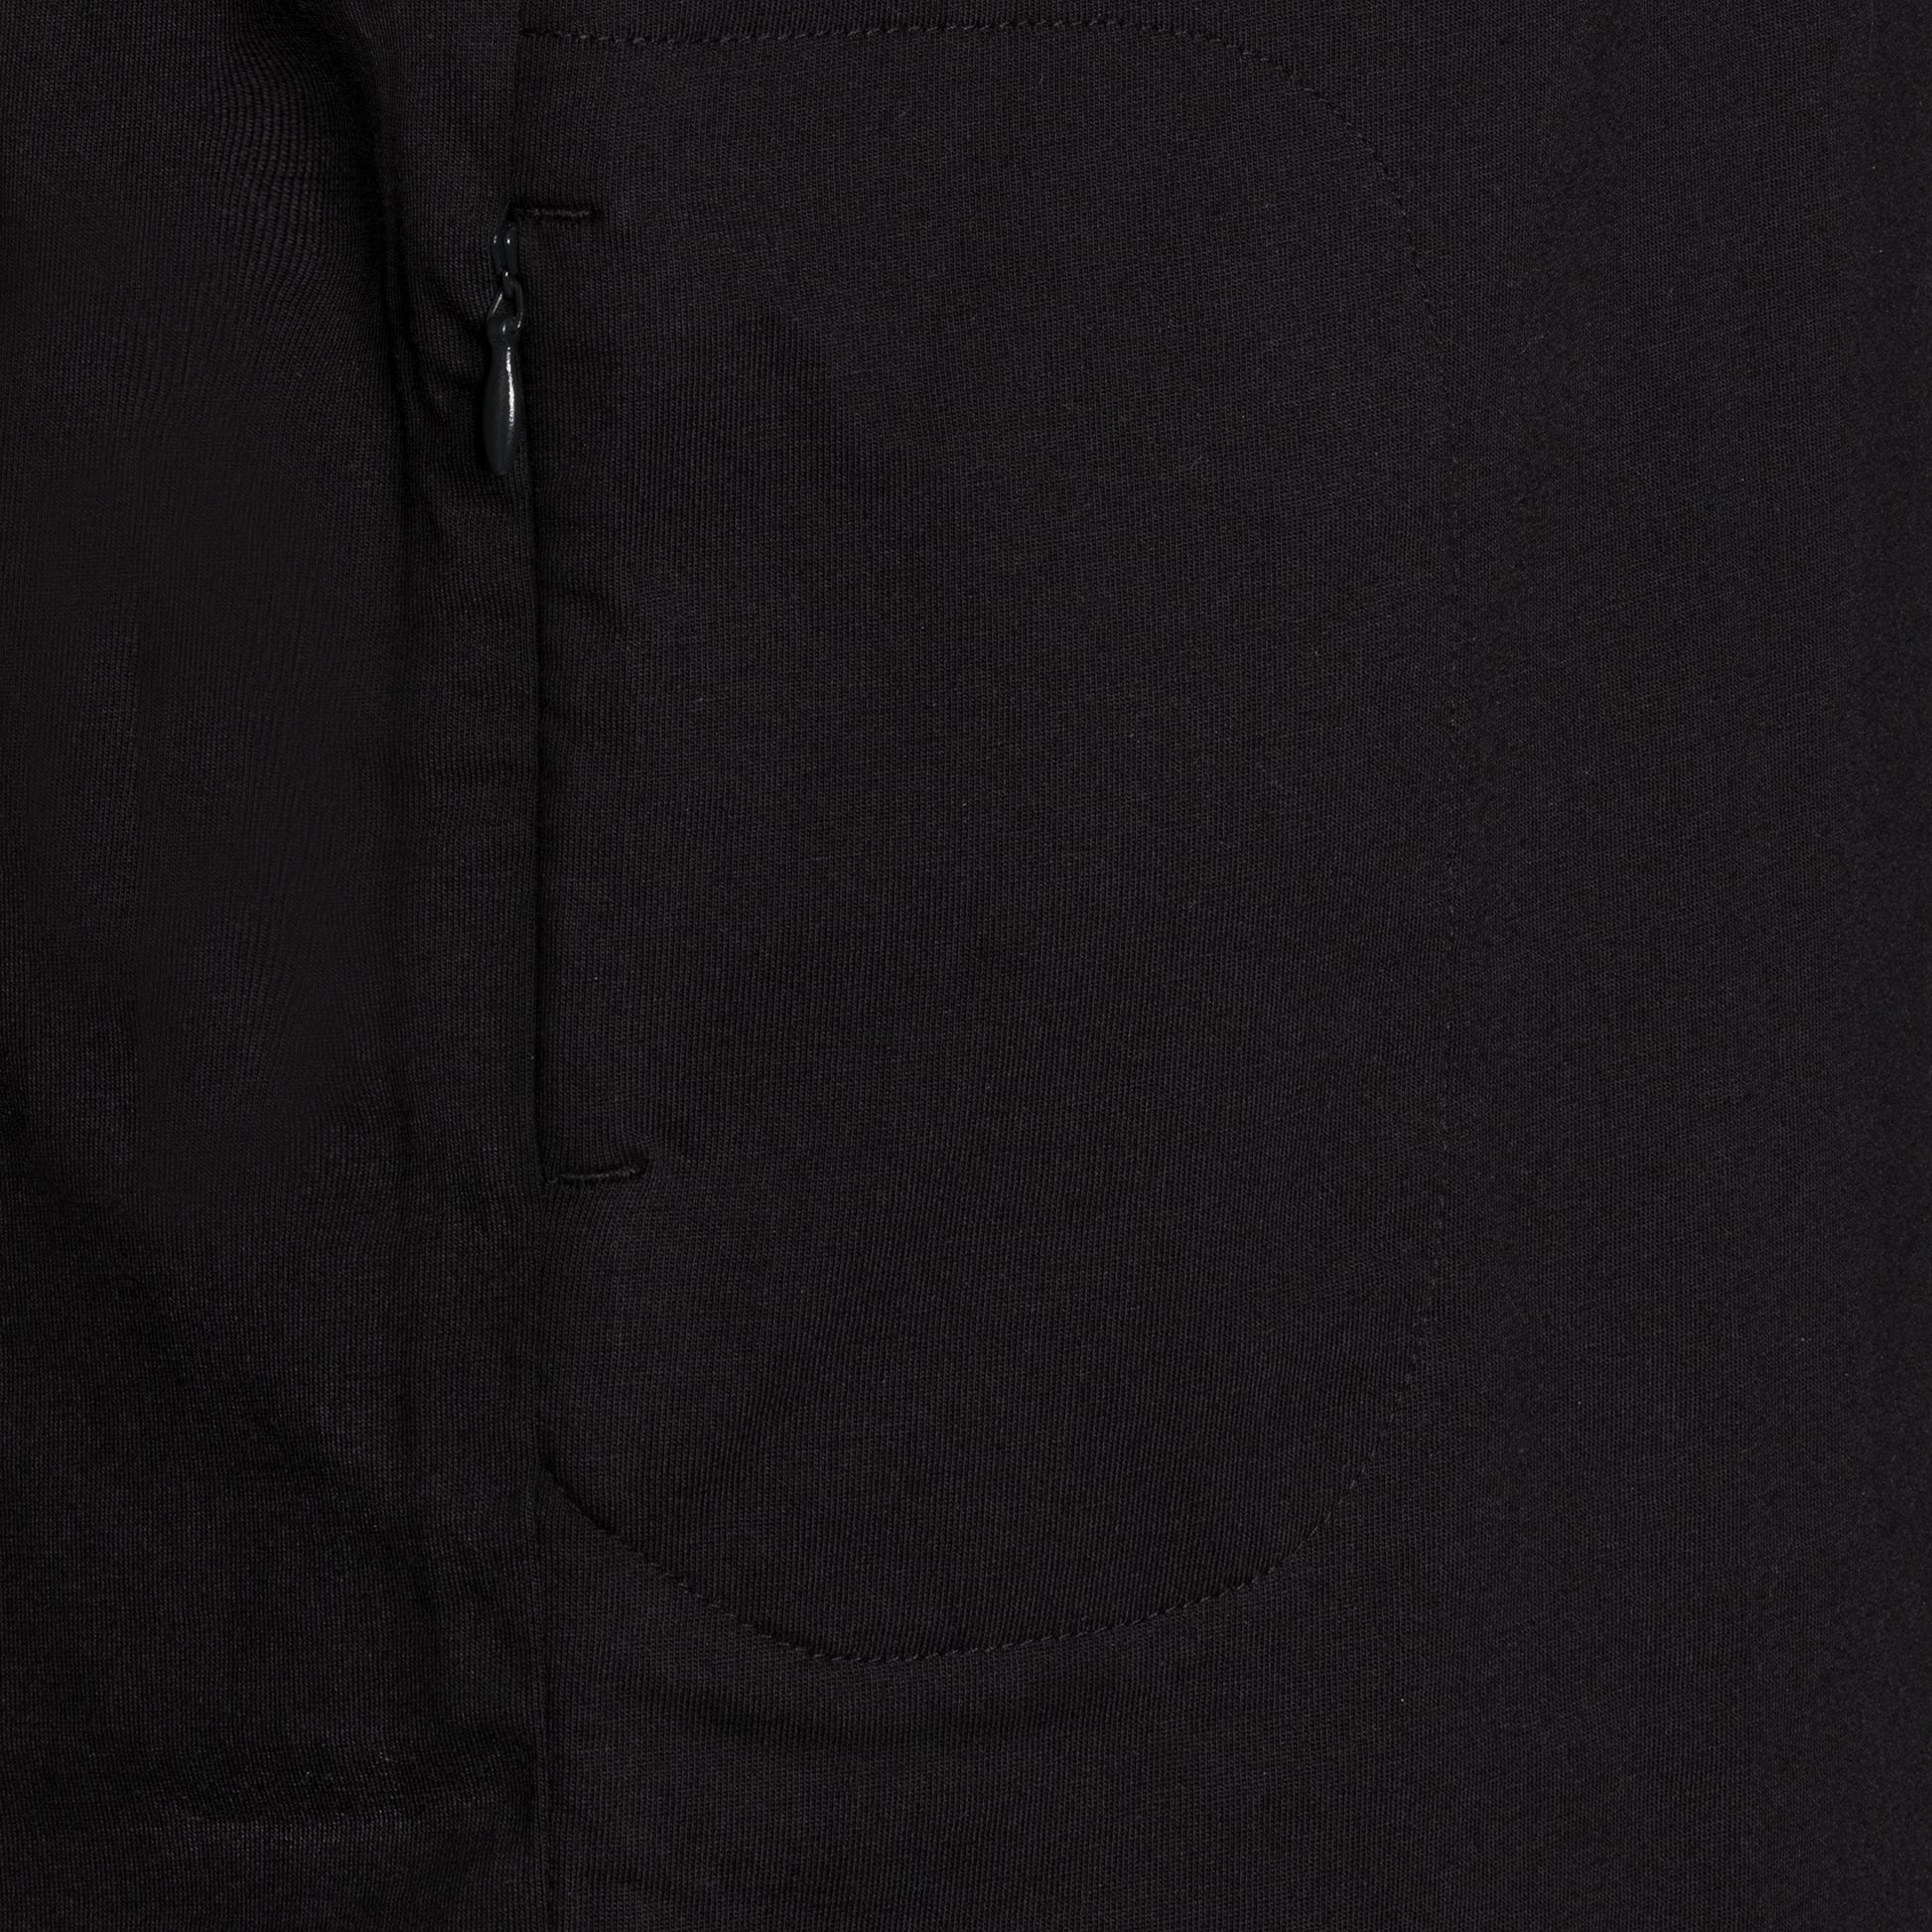 SPYSCAPE Spymaster T-shirt with Hidden Zip Pocket - Close up of hidden pocket